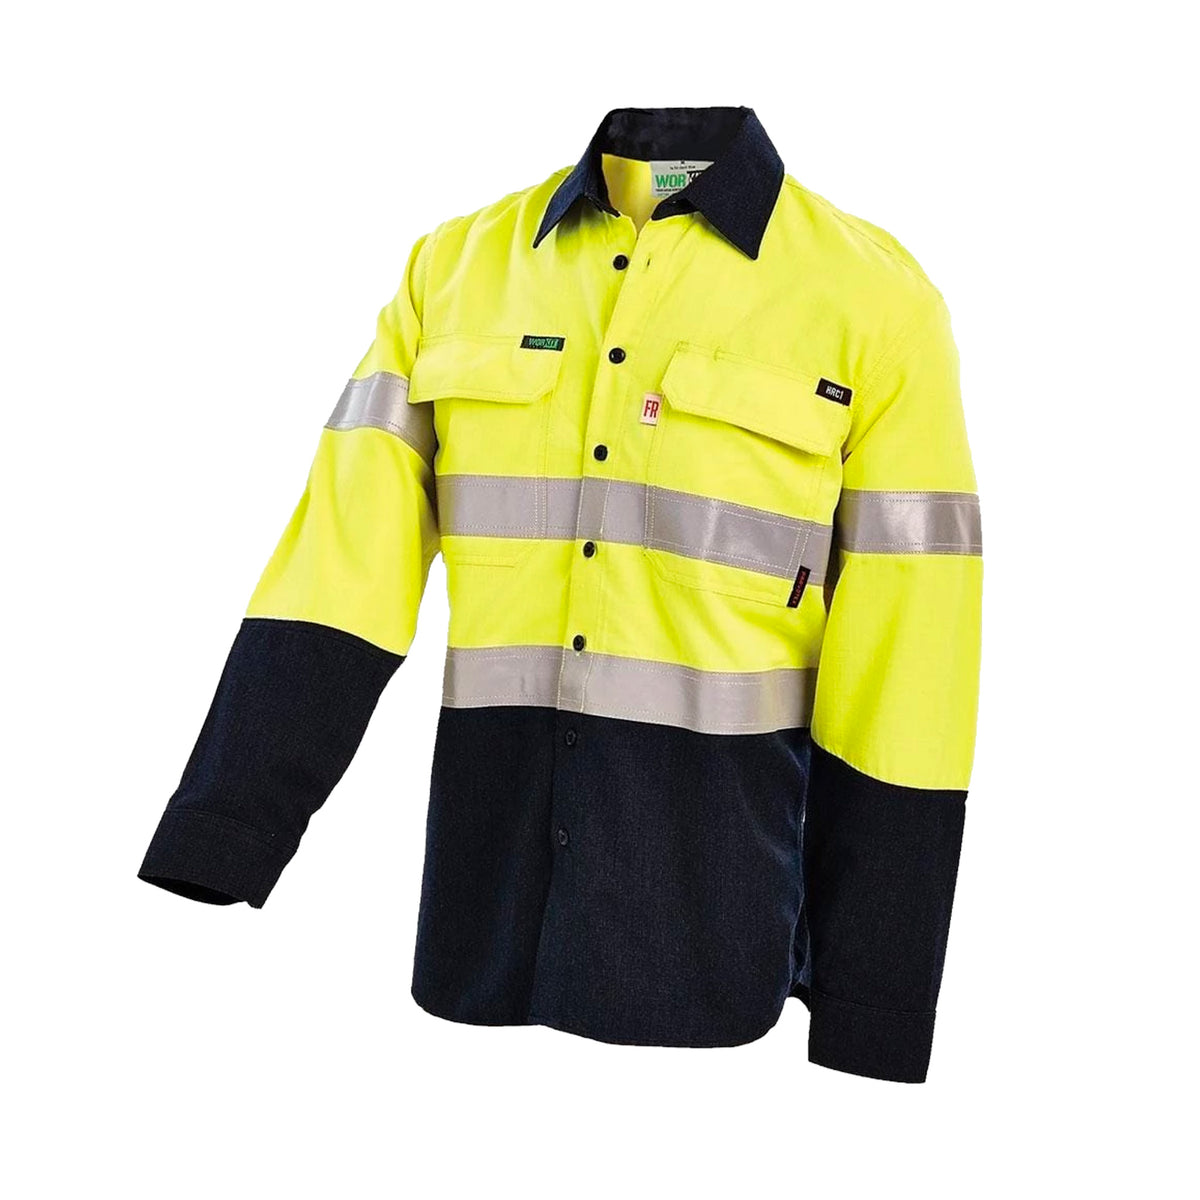 ripstop hi vis flame resistant shirt in yellow navy